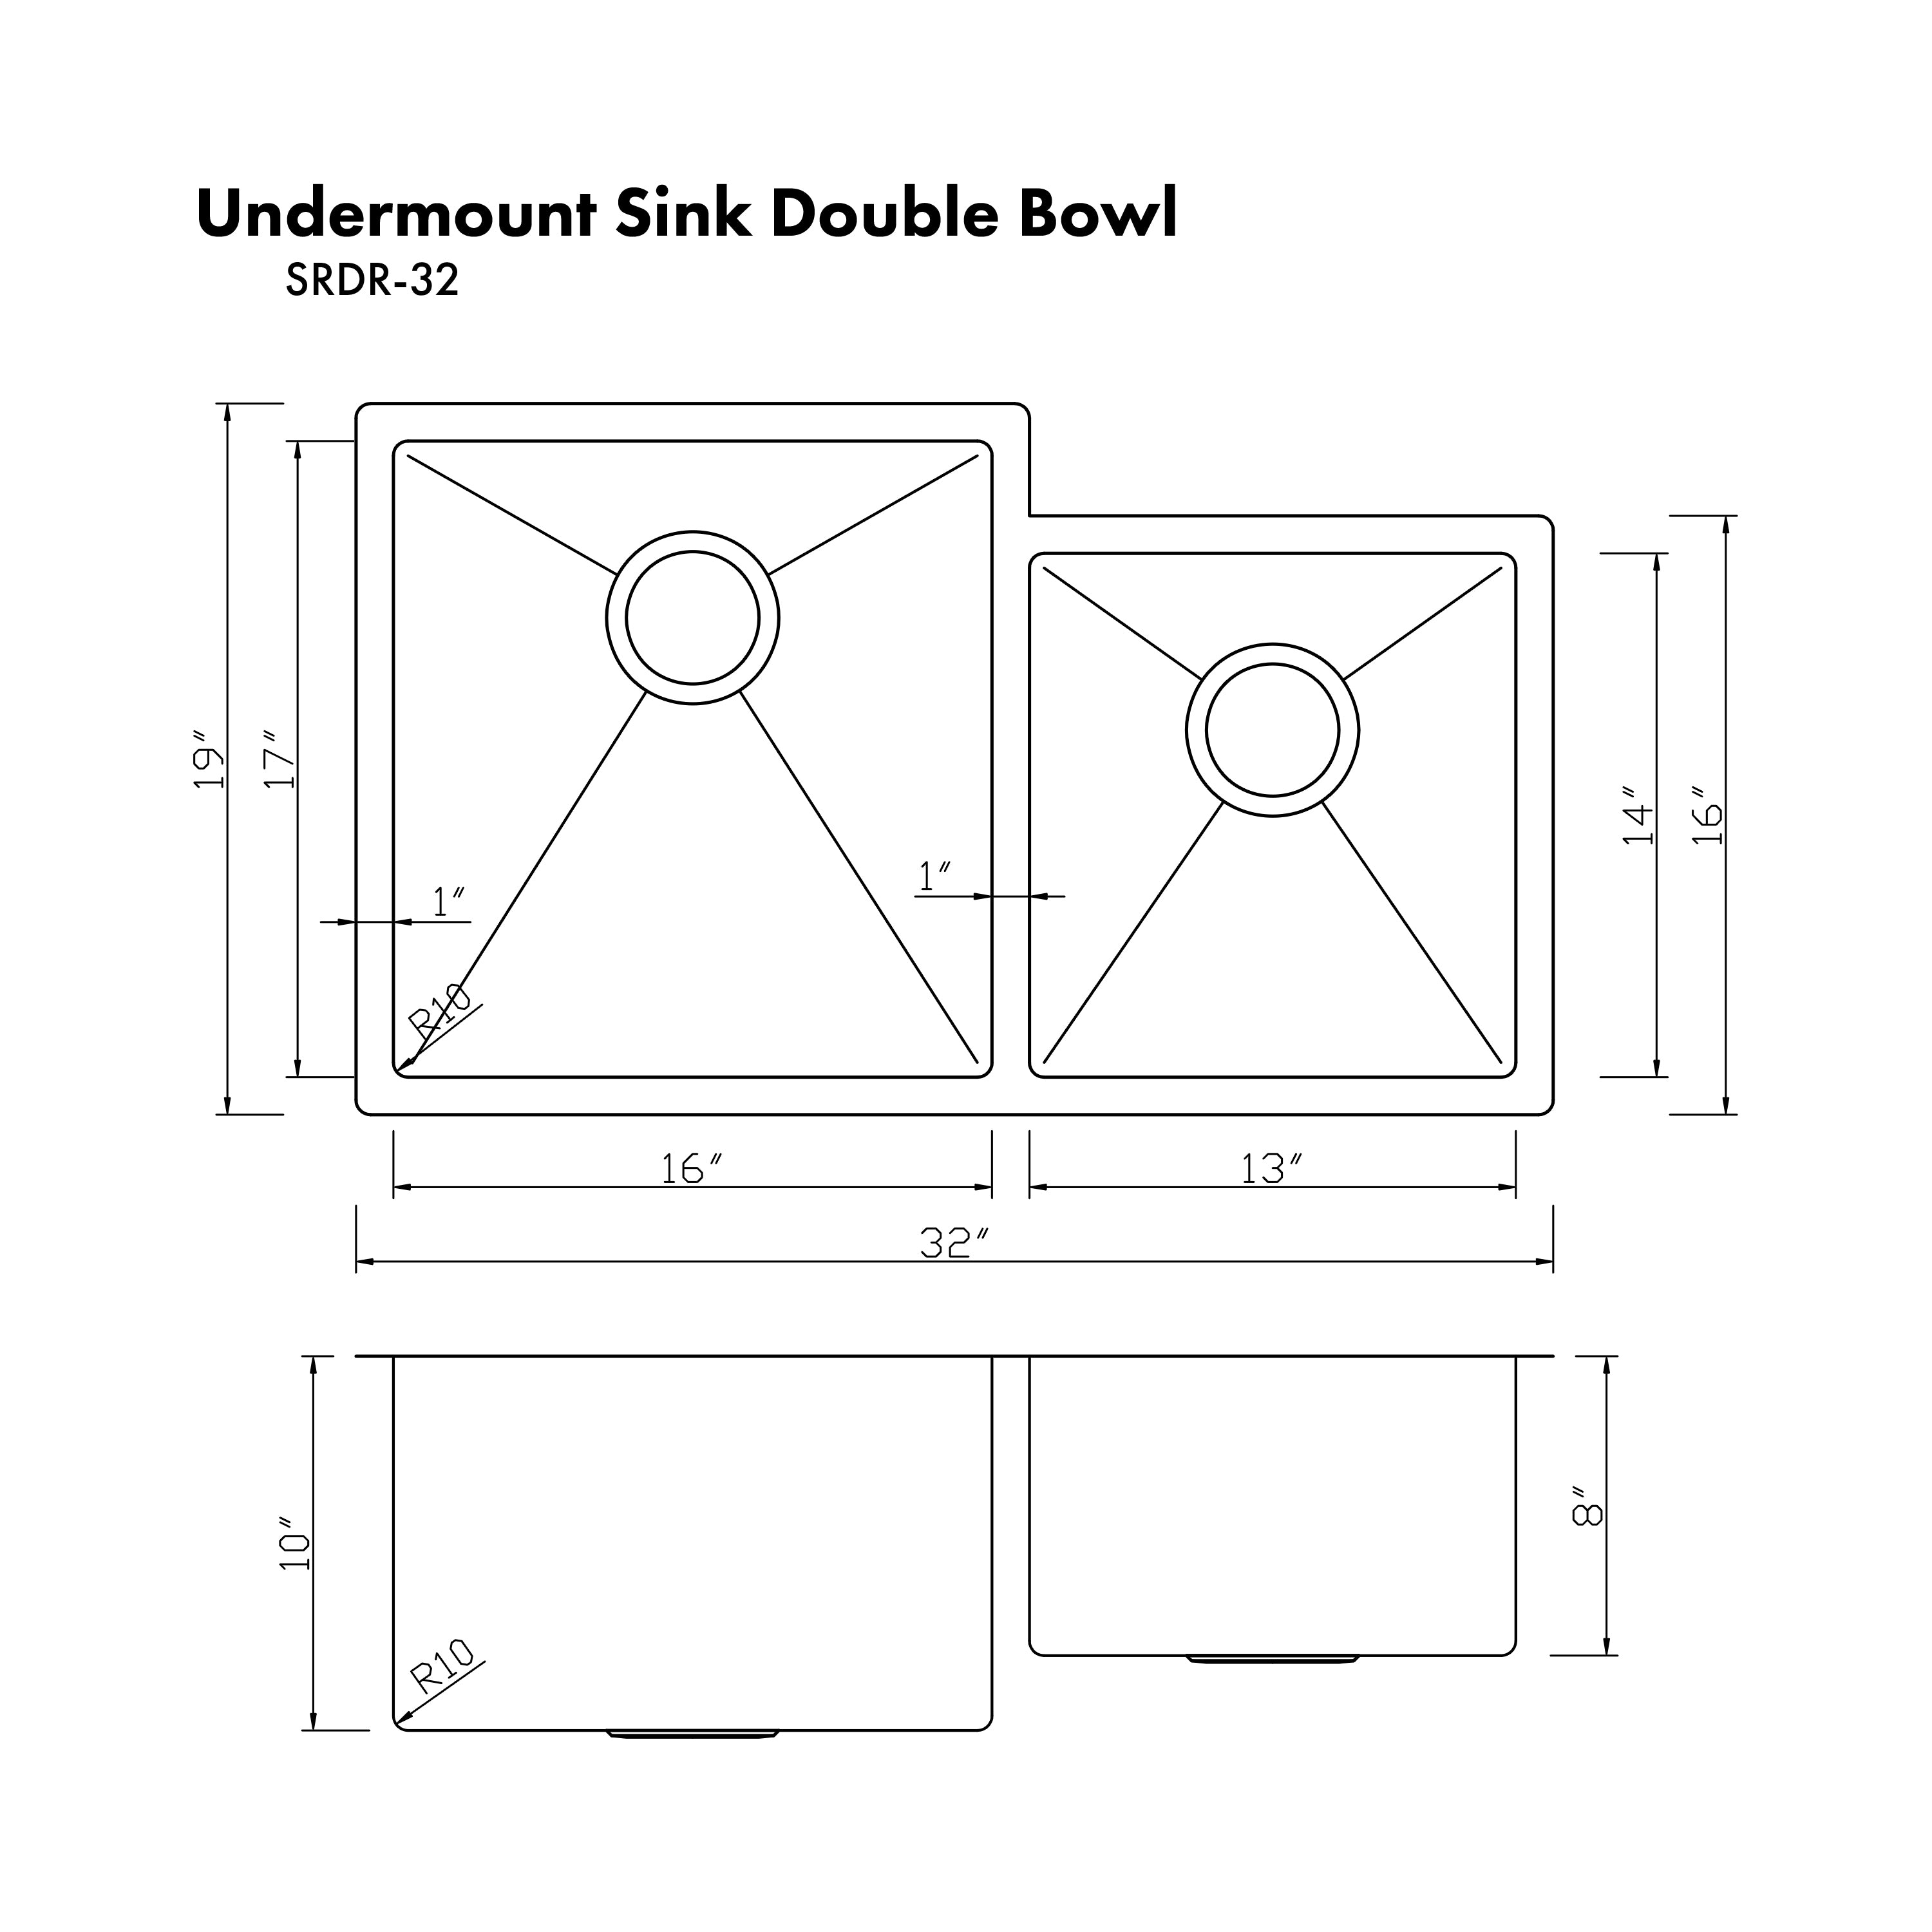 ZLINE 32" Jackson Undermount Double Bowl Stainless Steel Kitchen Sink with Bottom Grid (SRDR-32)